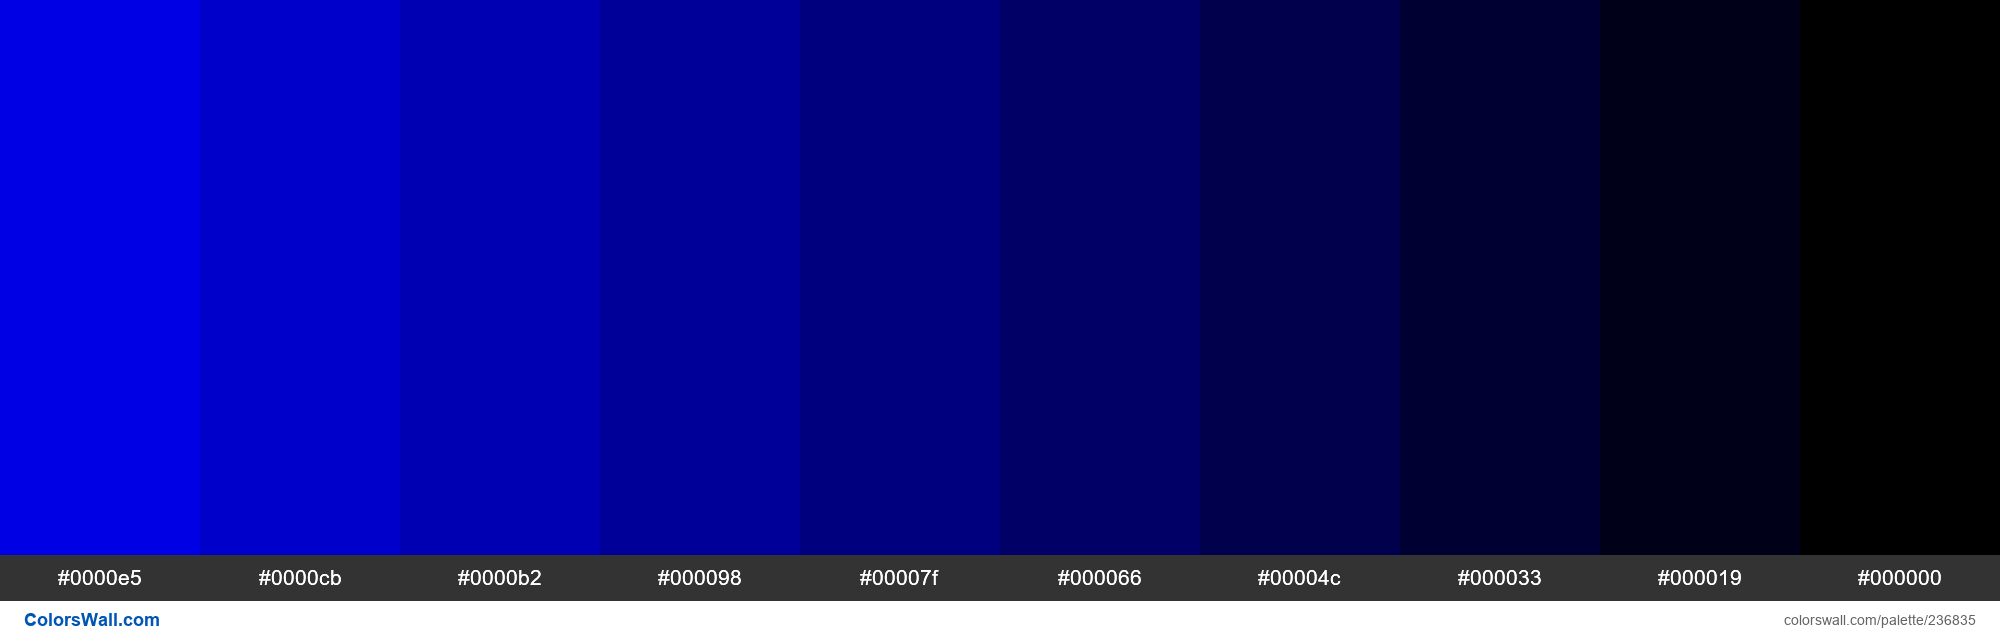 Dark Blue to dark colors palette | ColorsWall